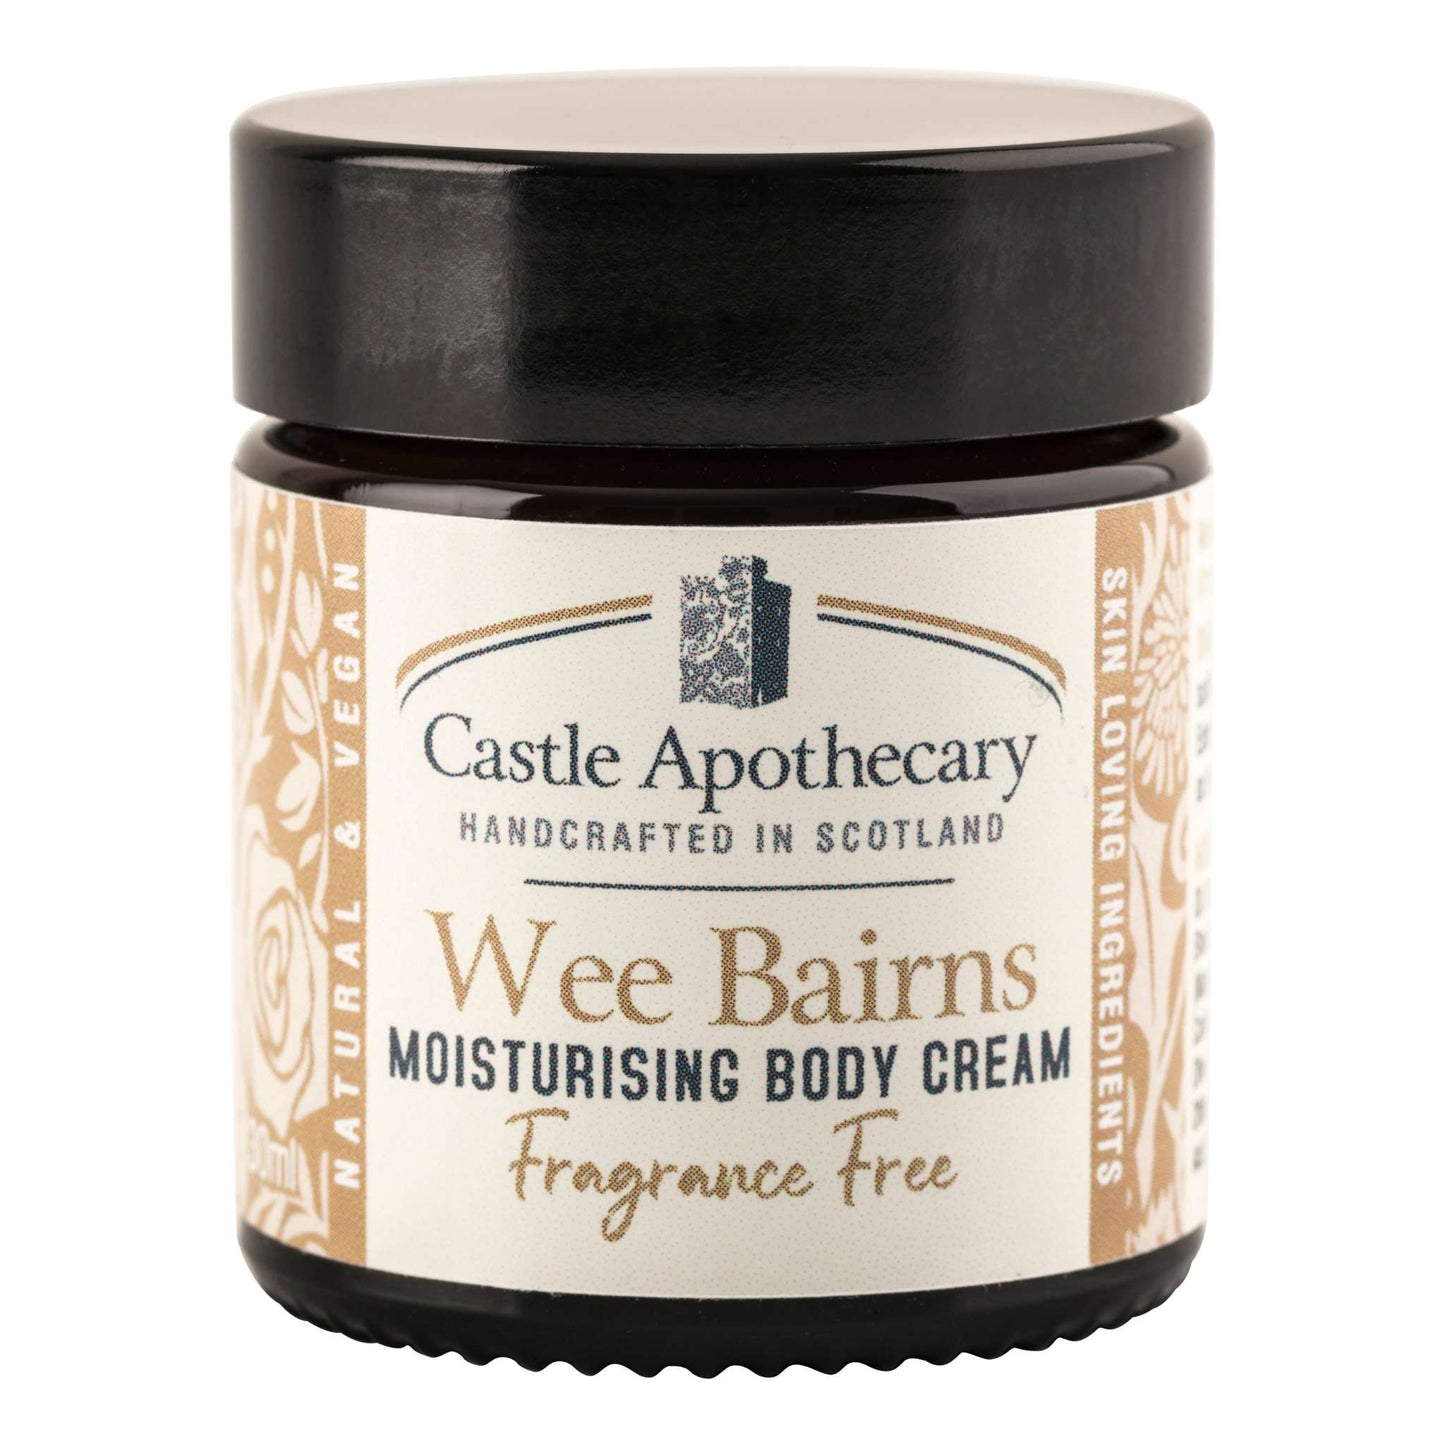 Wee Bairns - Moisturising Body Cream with Calendula Fragrance Free